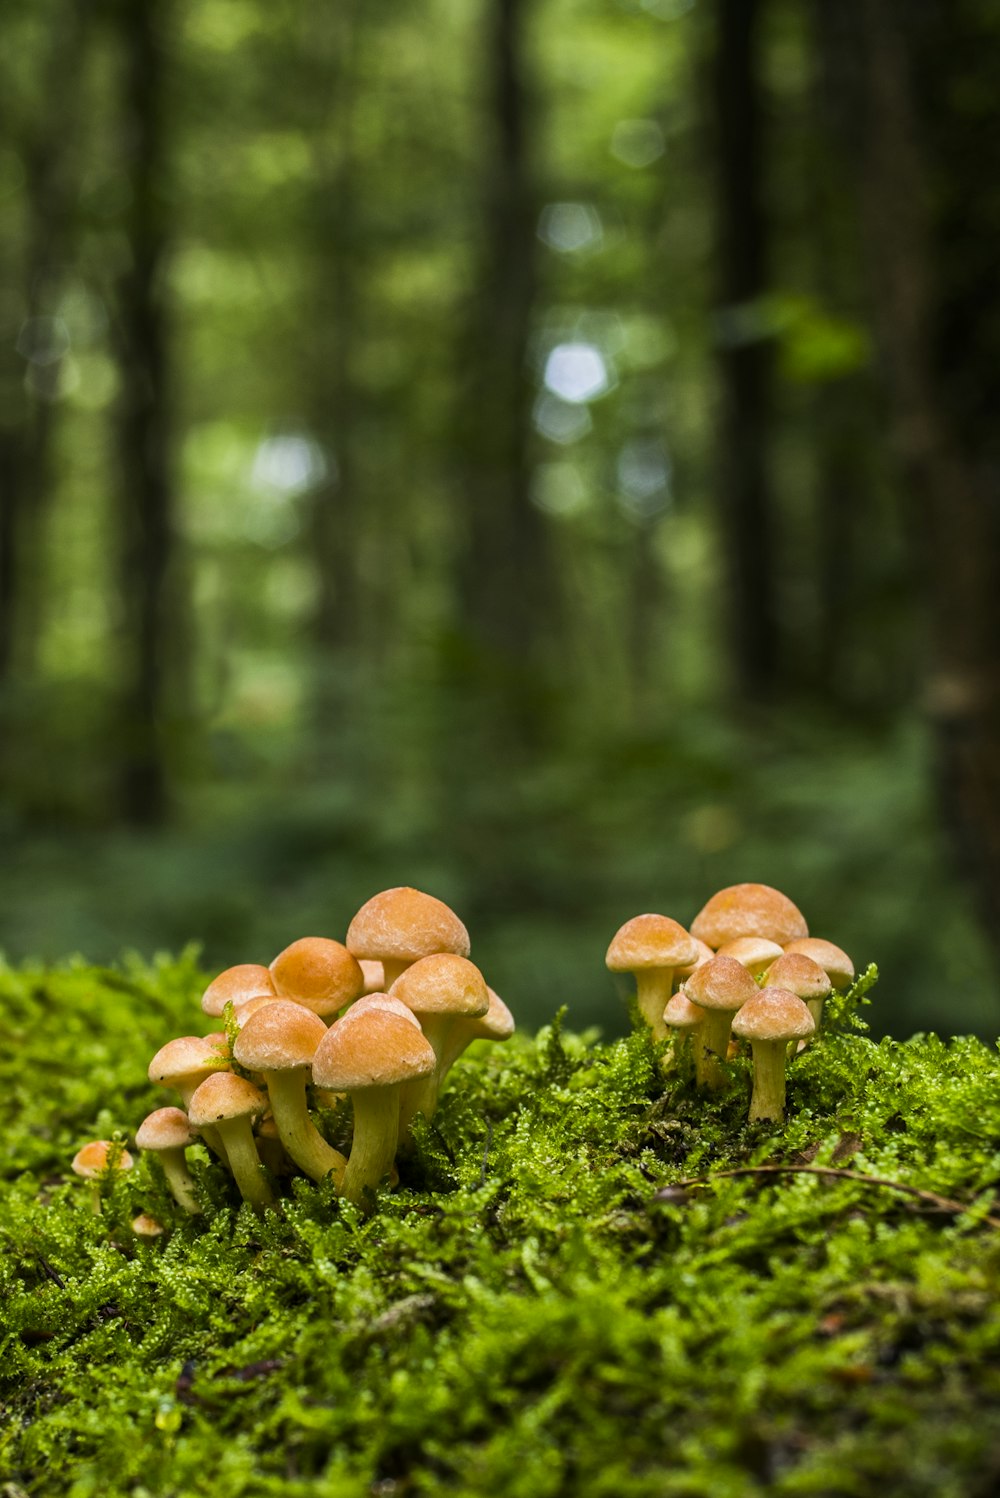 cogumelos marrons na grama verde durante o dia